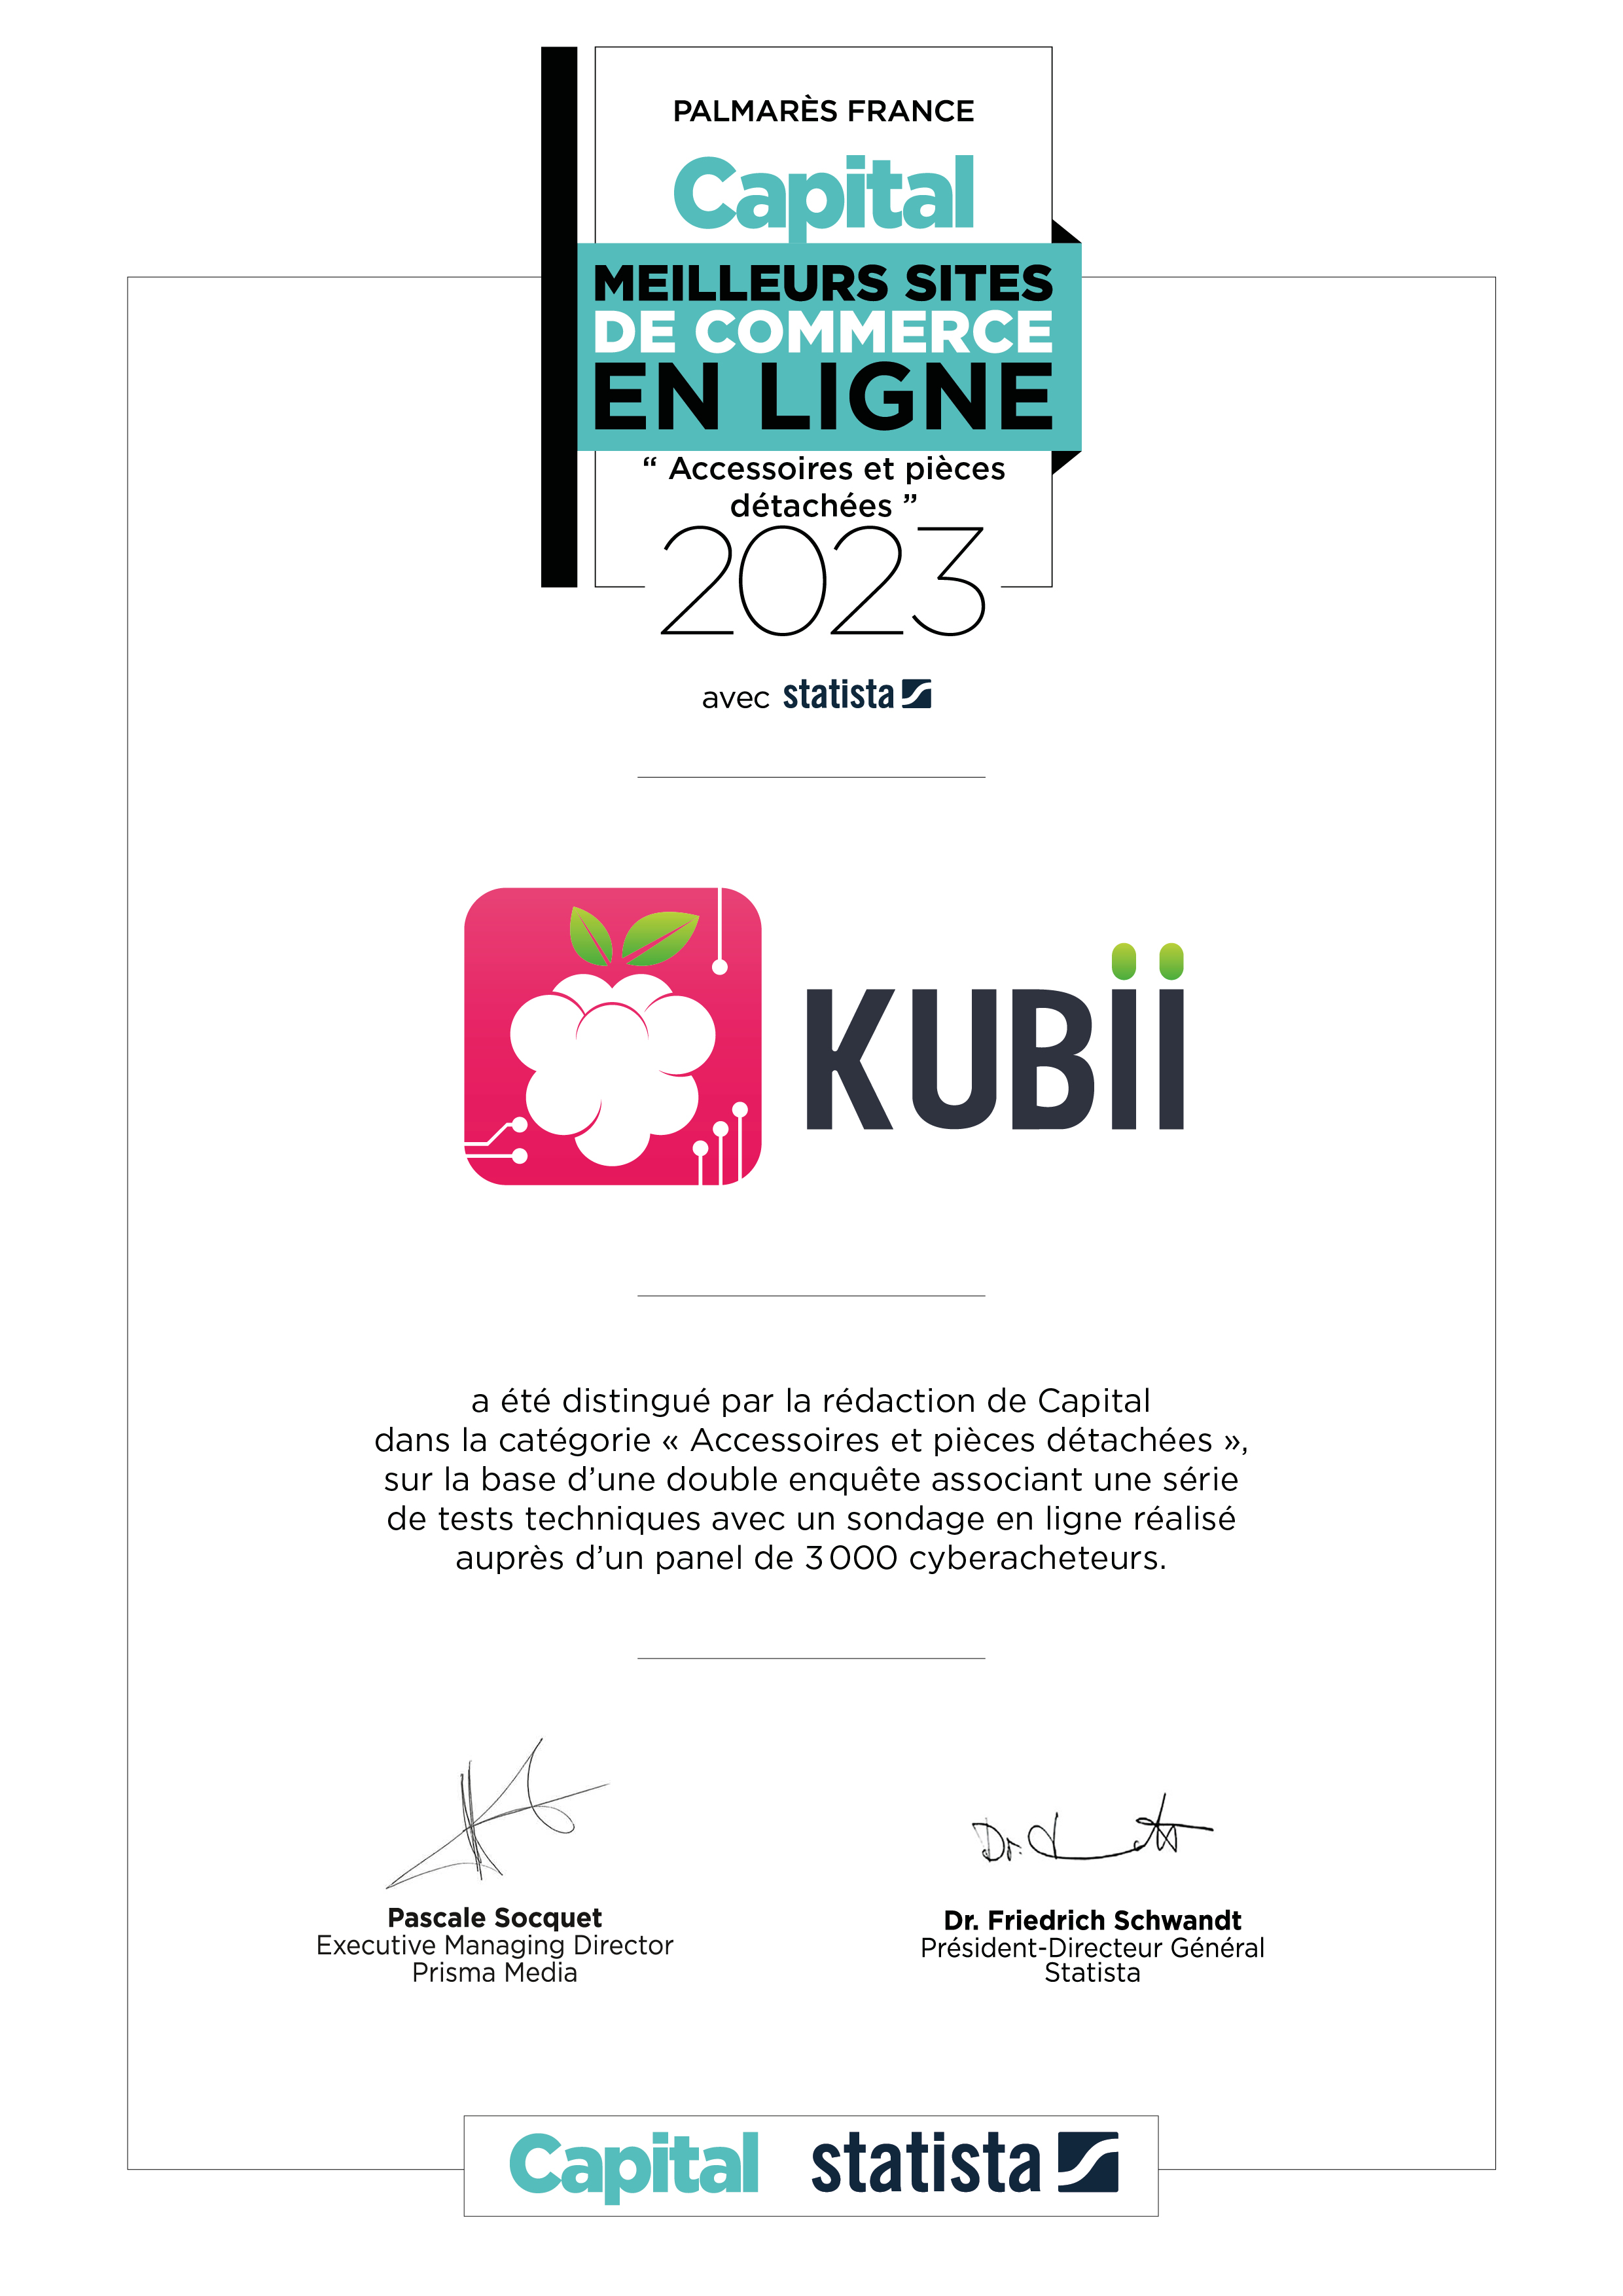 KUBII_Certificat2023.jpg